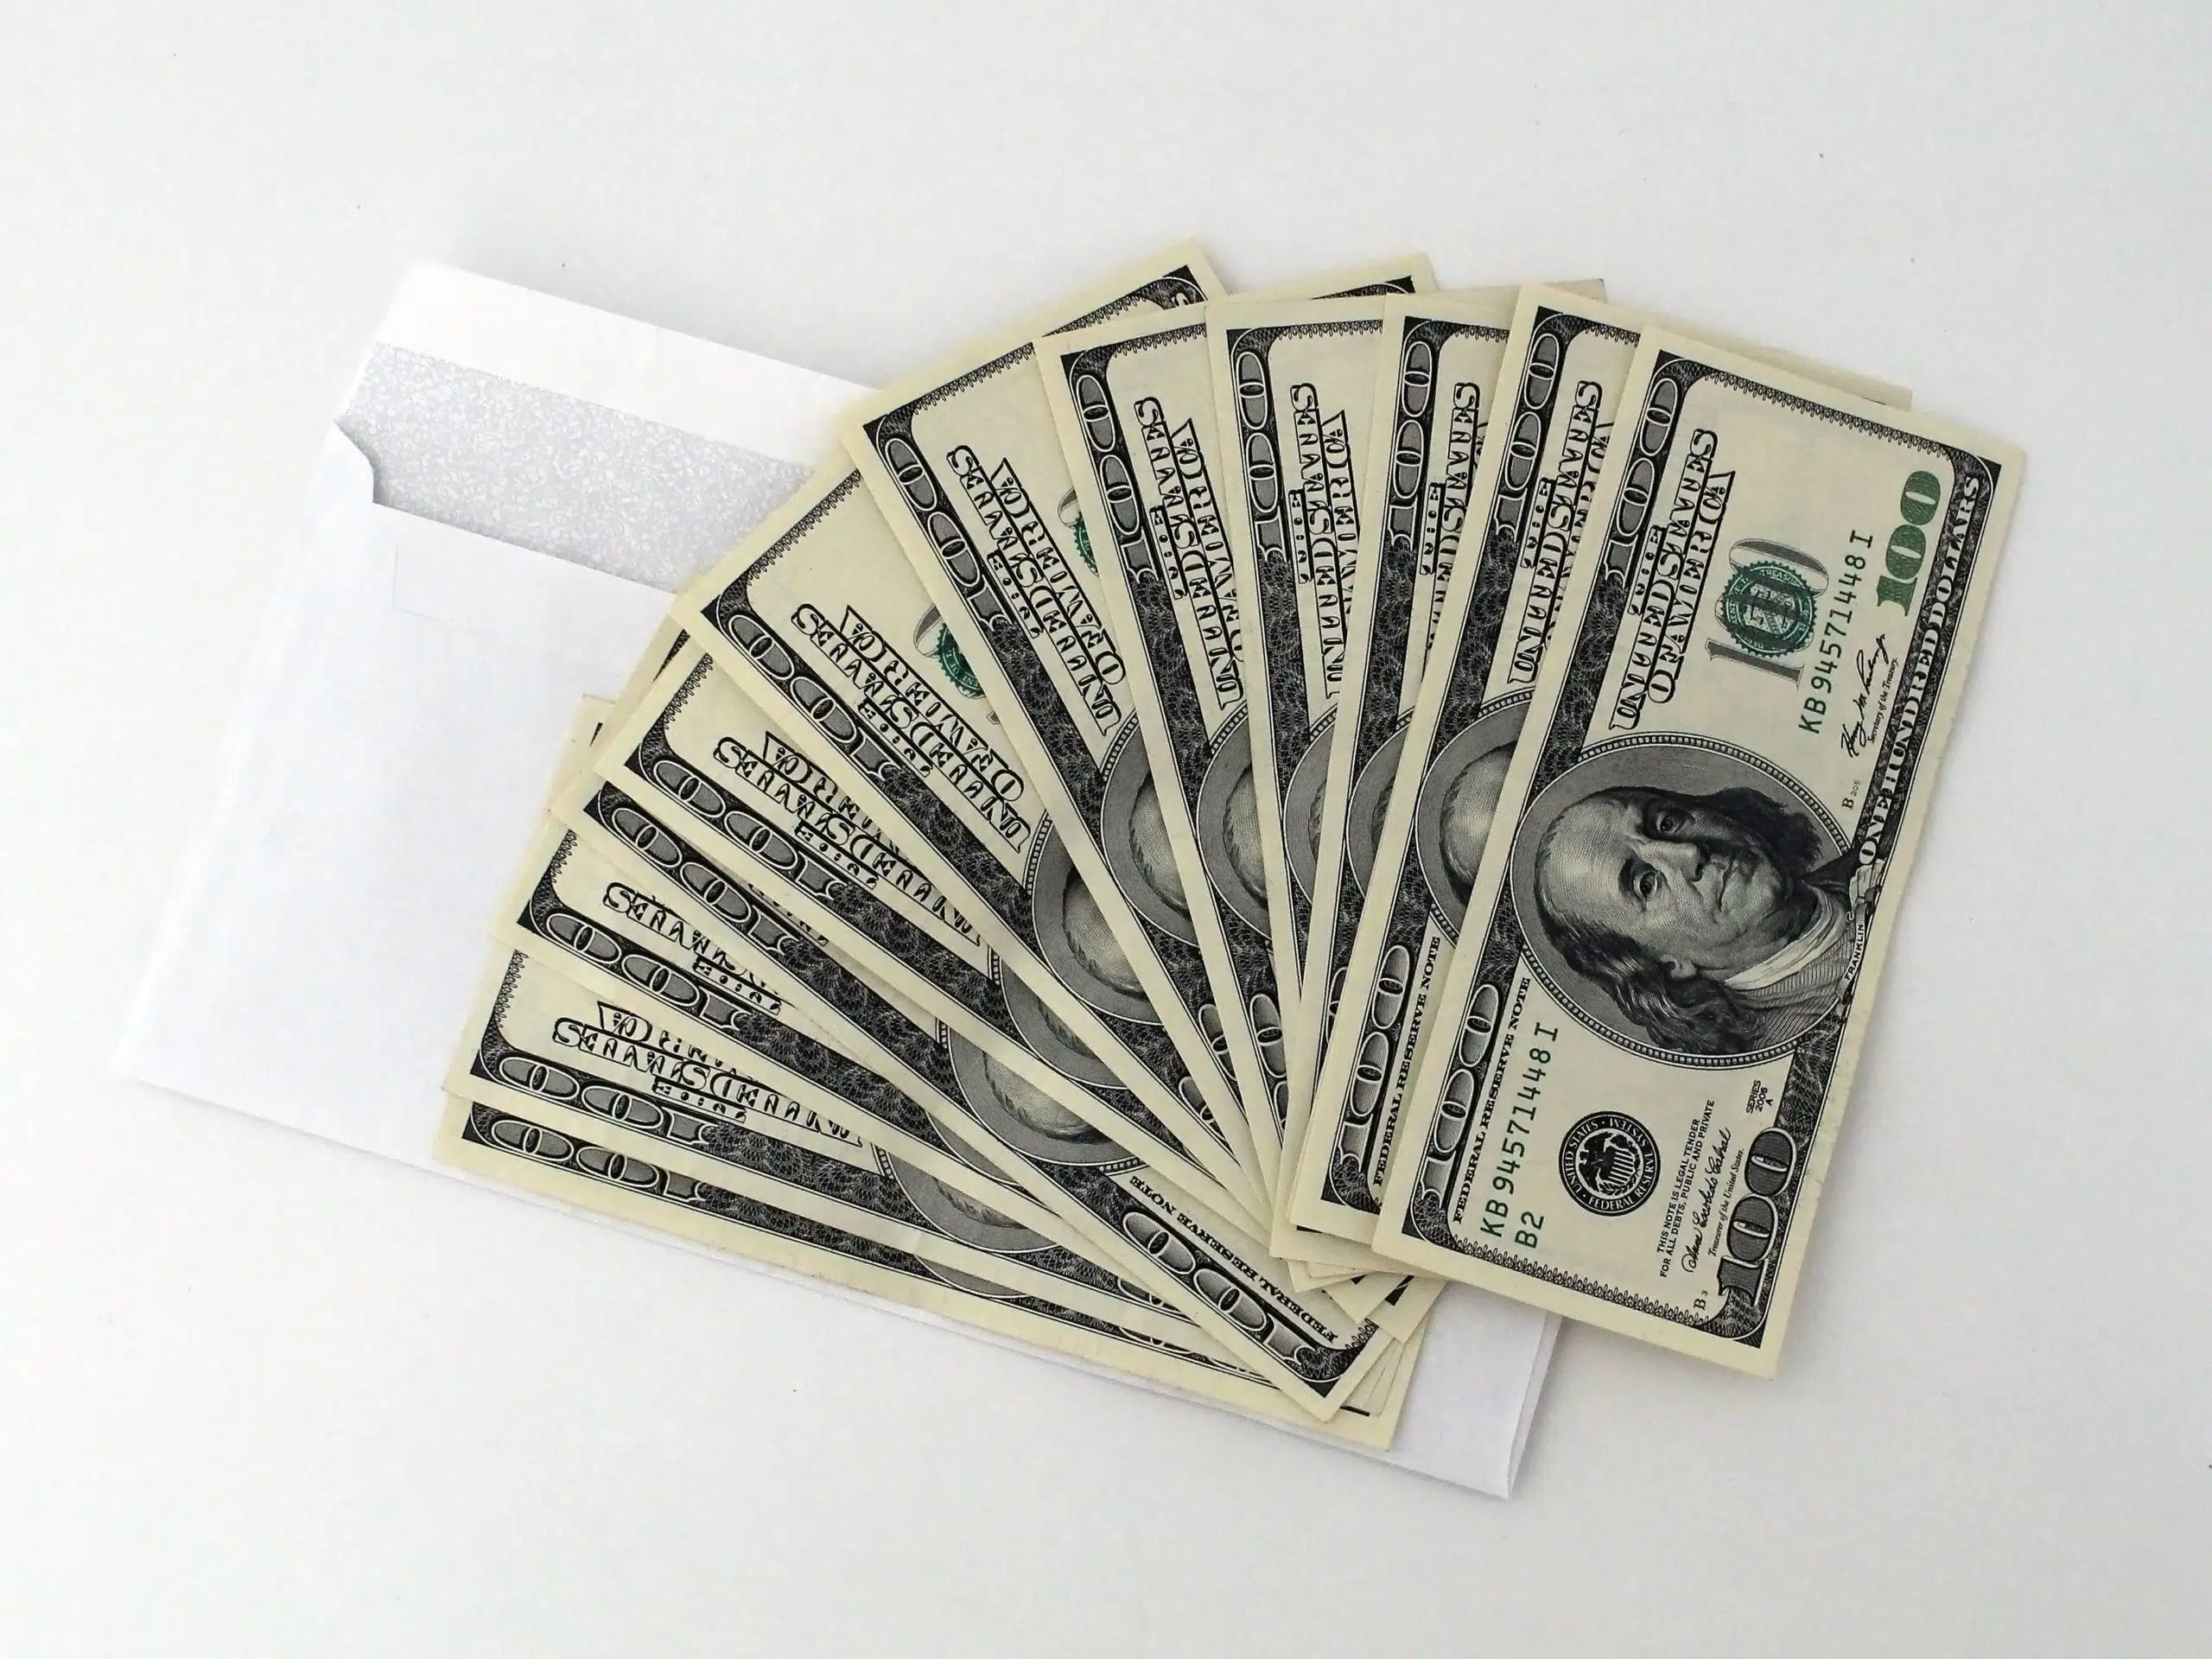 cum fac bani online? 23 de metode testate in - olteniabizz cum fac bani online